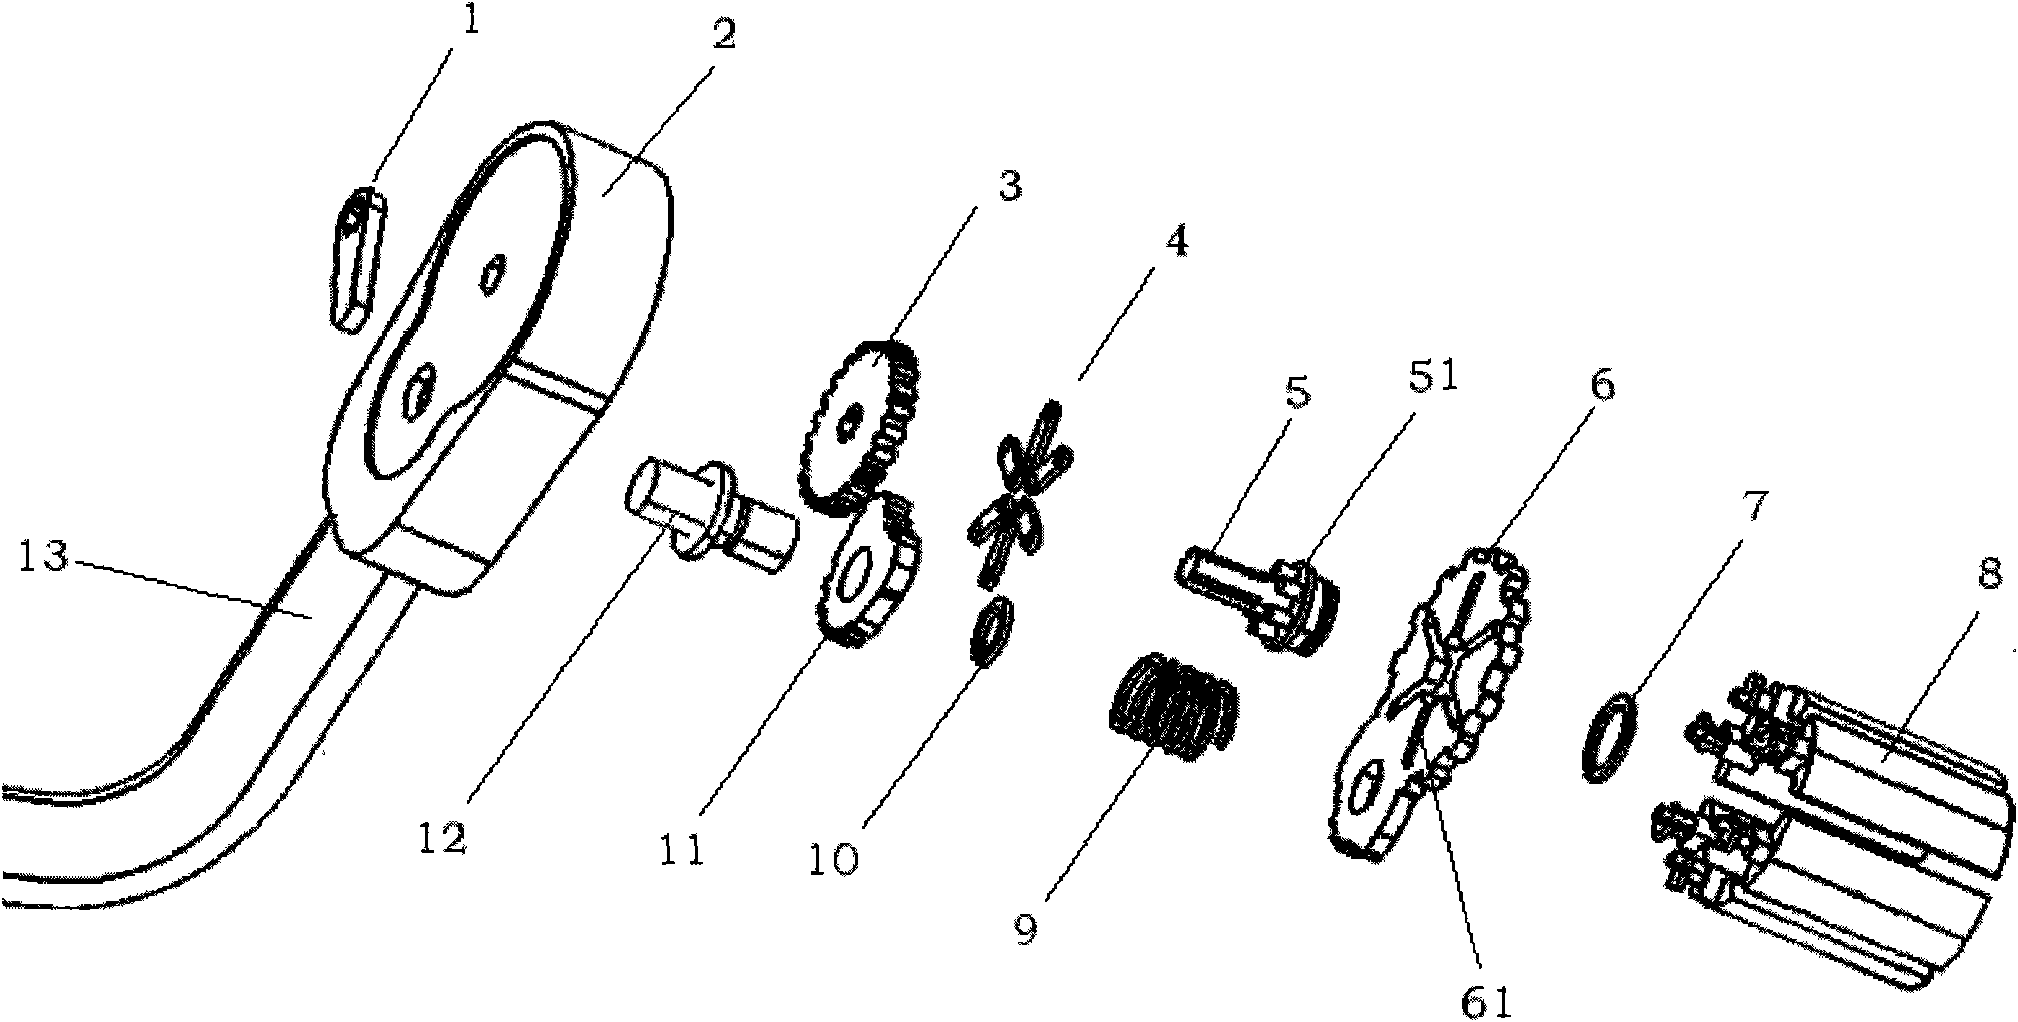 Regulable wheel wrench